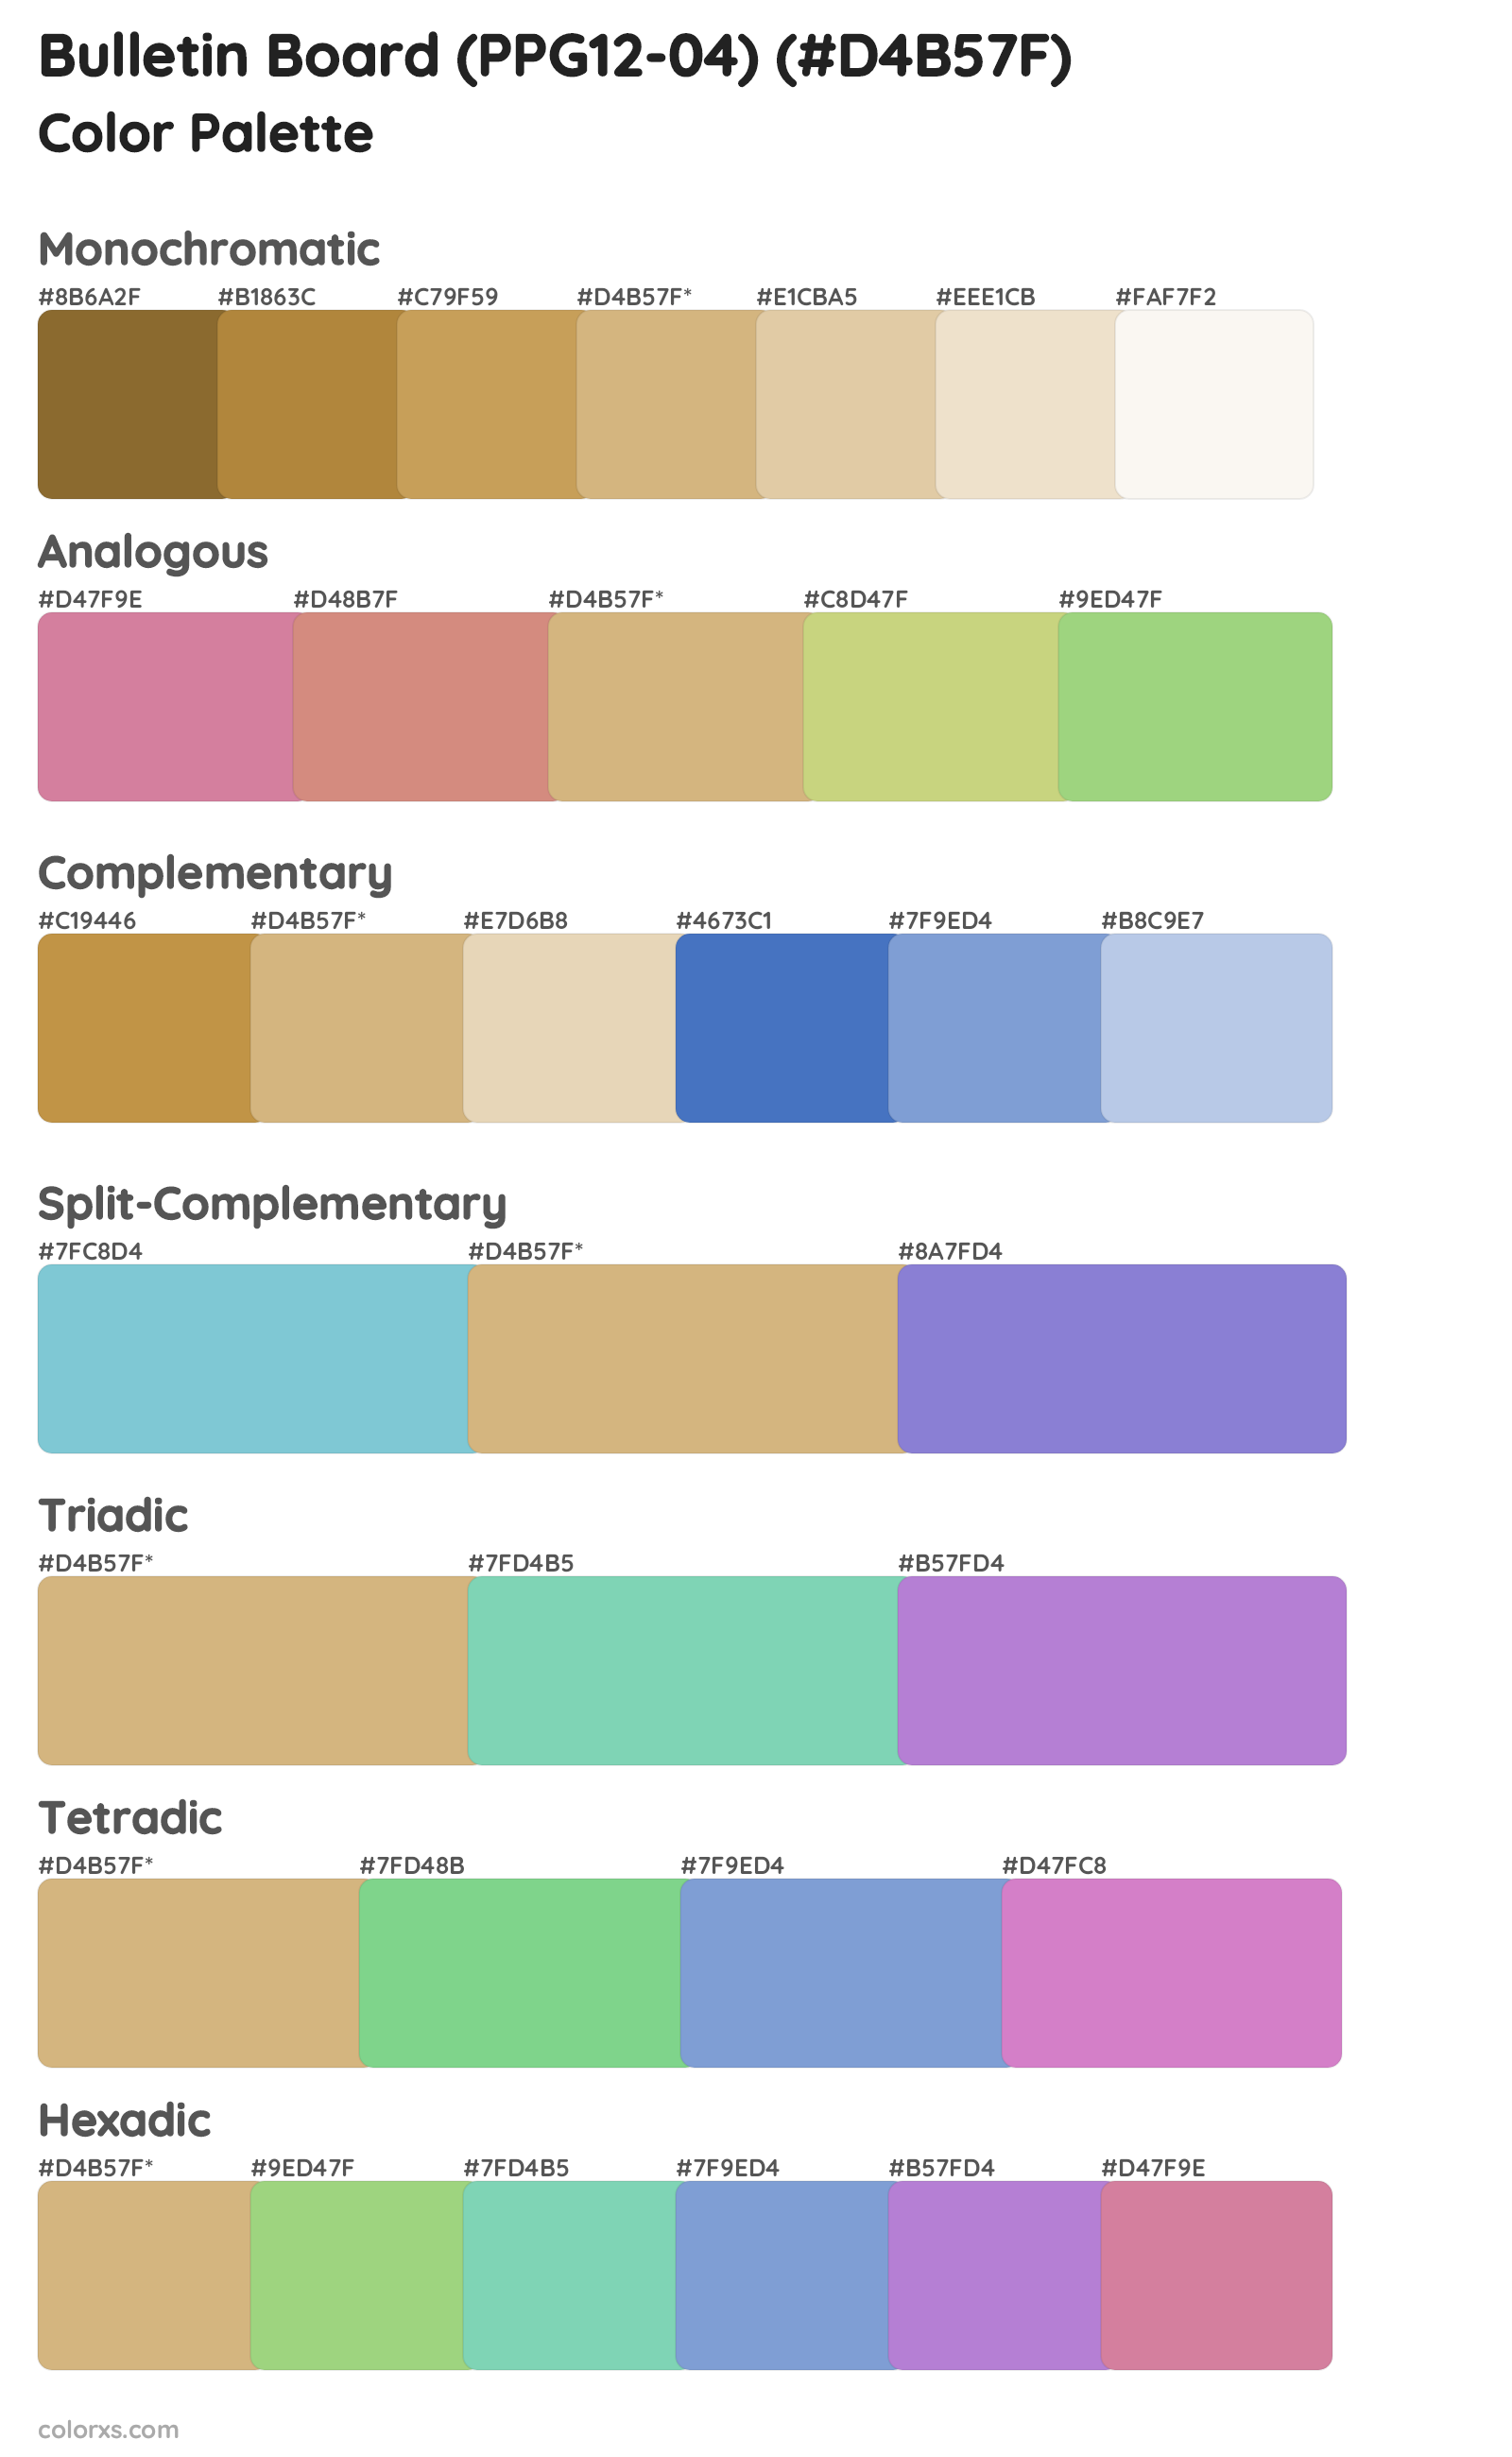 Bulletin Board (PPG12-04) Color Scheme Palettes